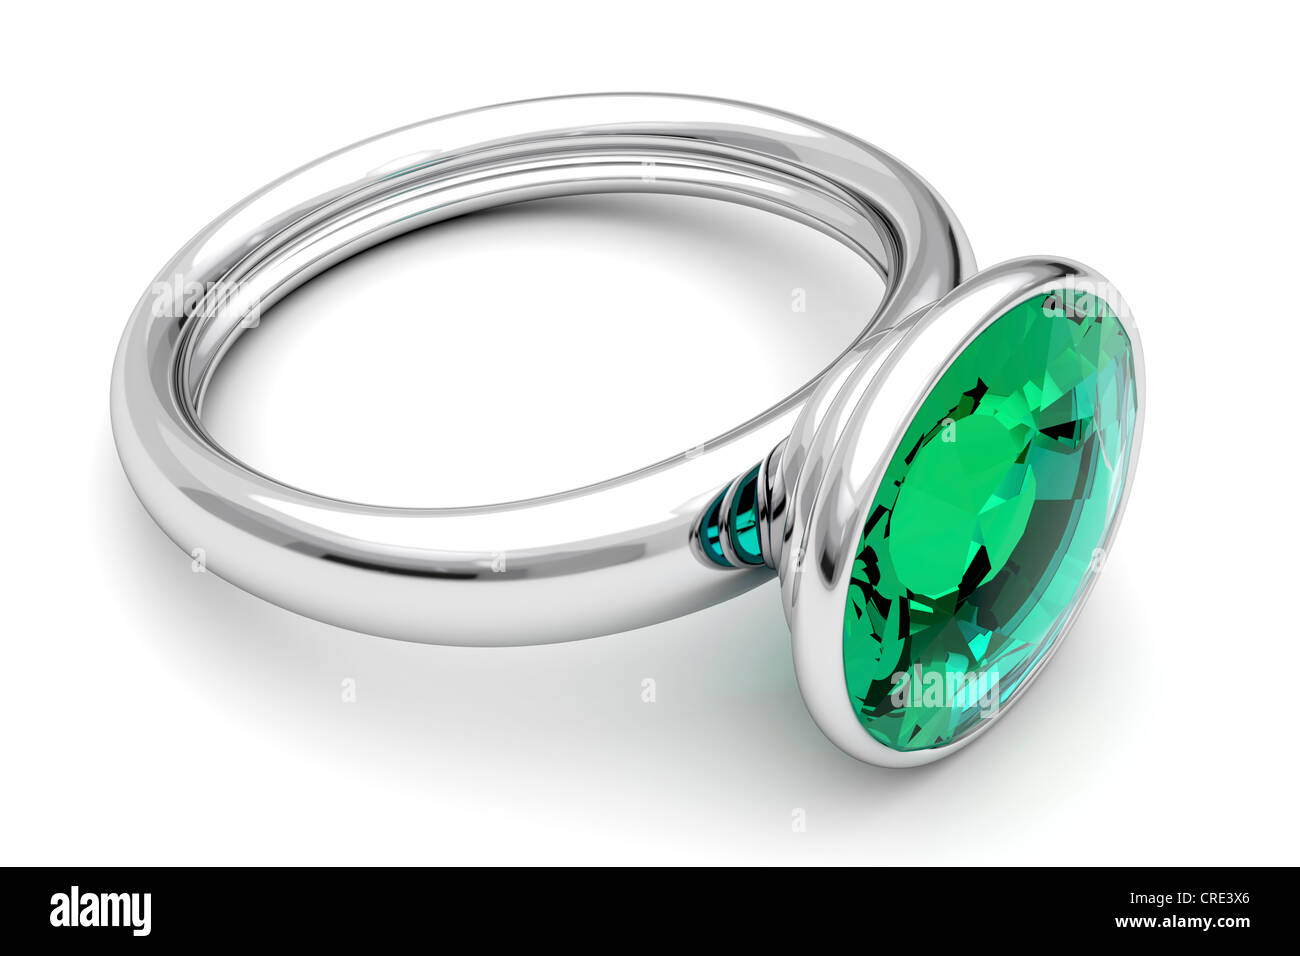 Platinum ring with green diamond Stock Photo